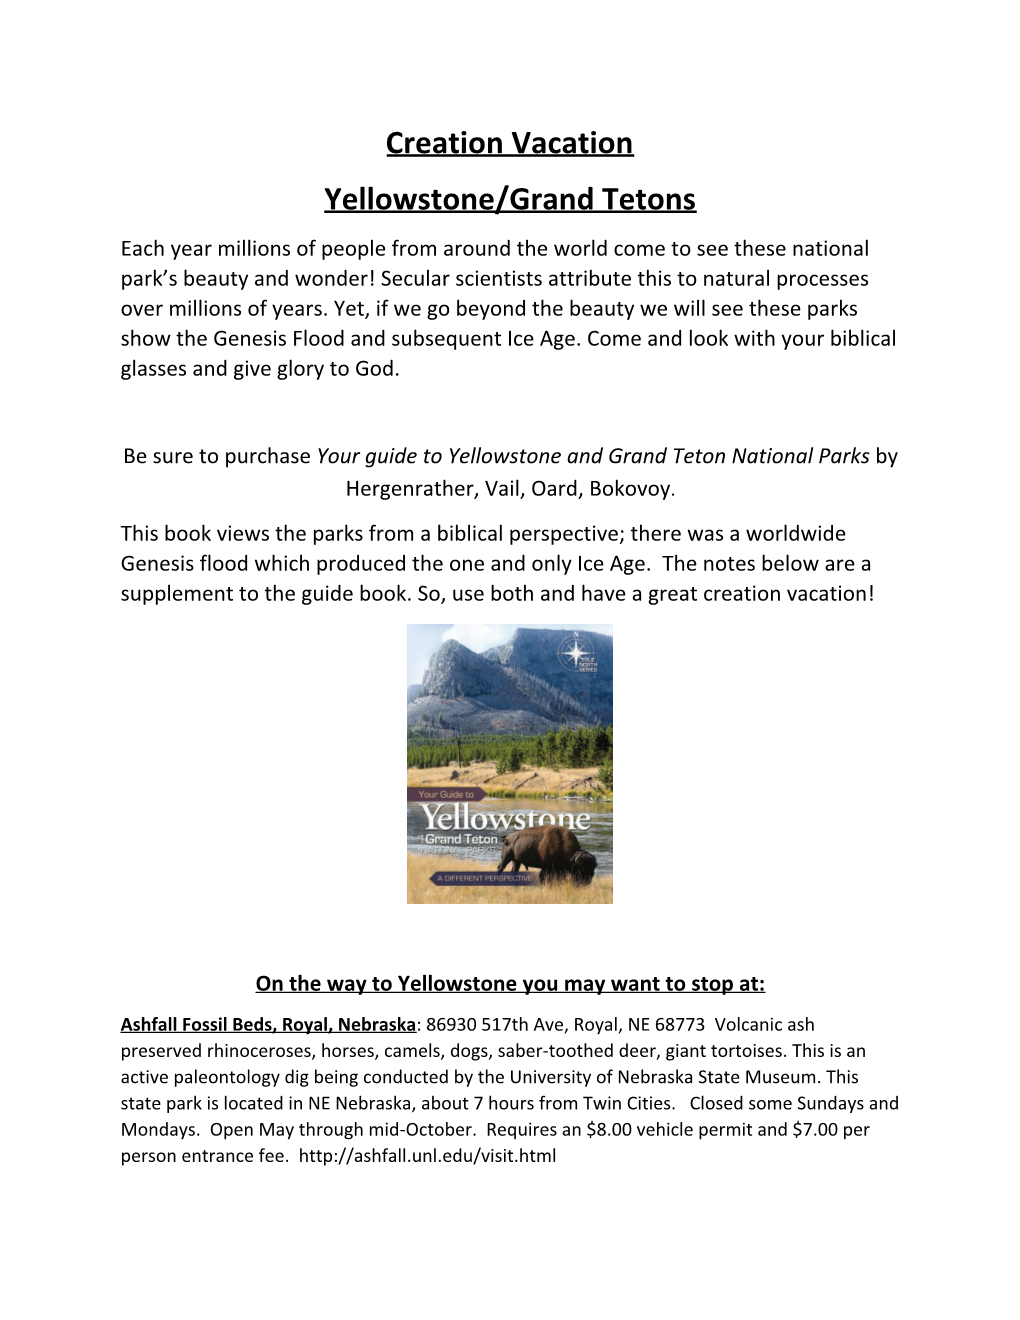 Creation Vacation Yellowstone/Grand Tetons